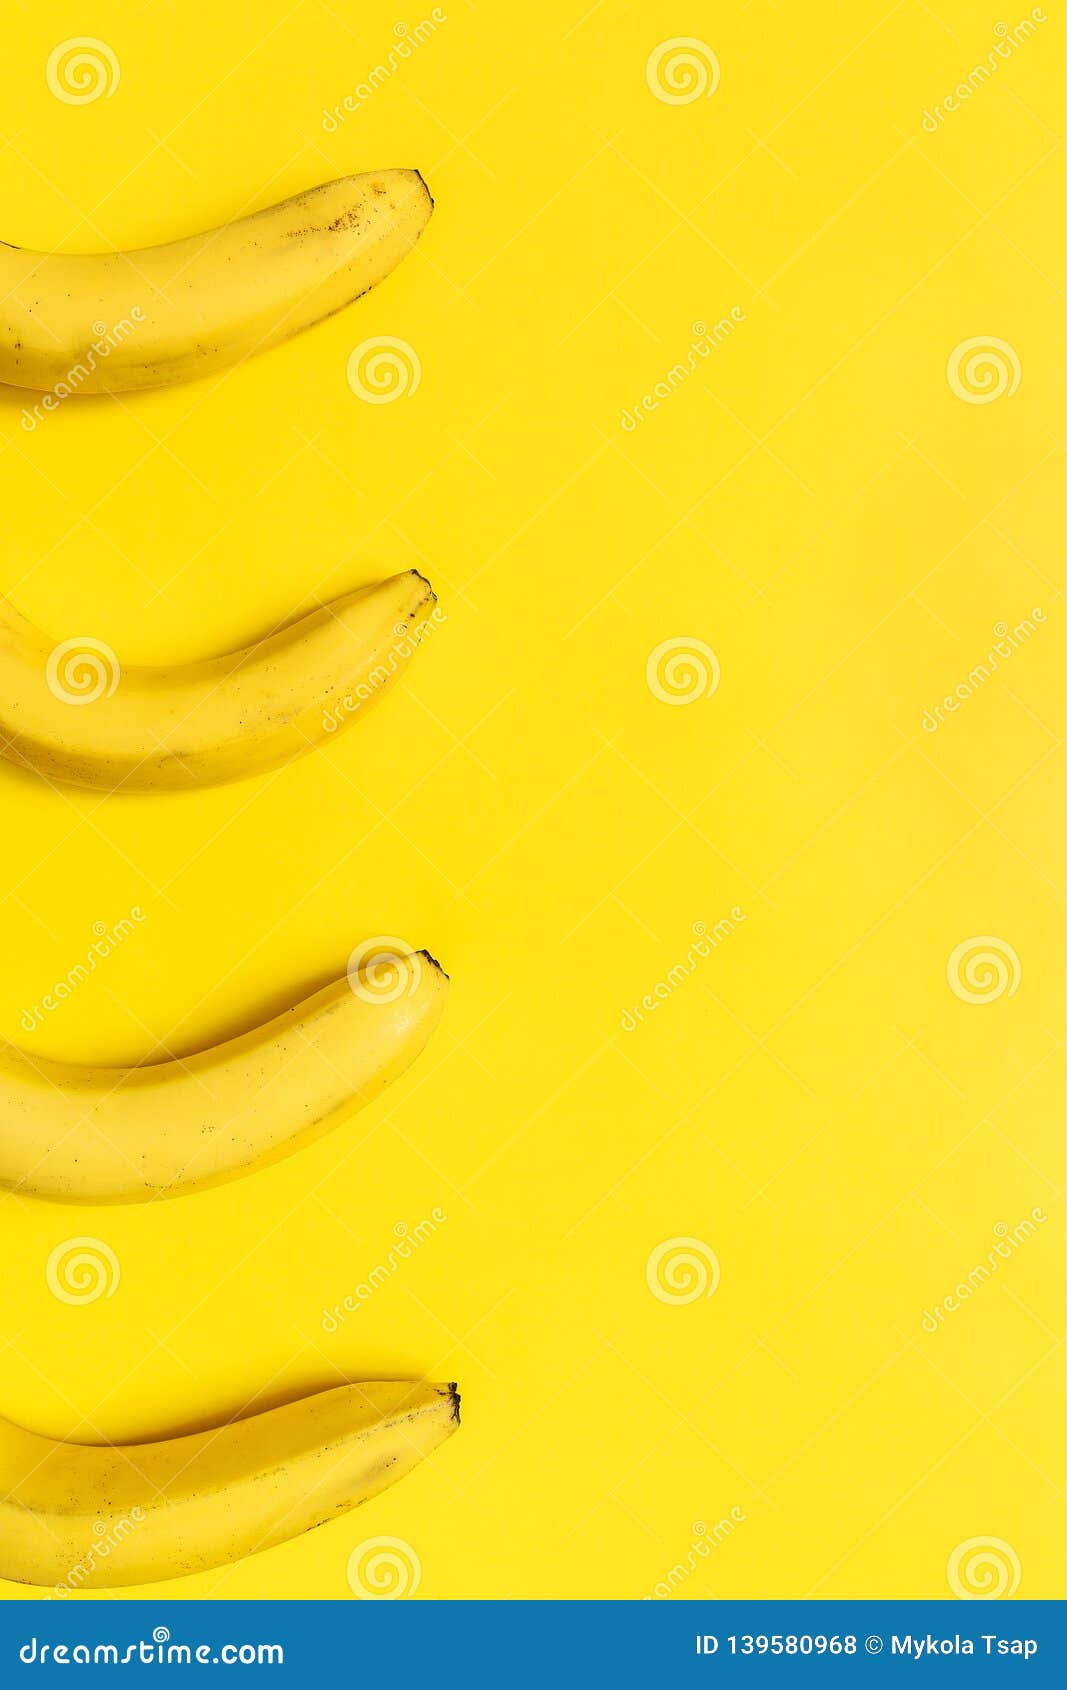 Colorful Vivid Banana Minimalistic Concept Stock Photo - Image of ...